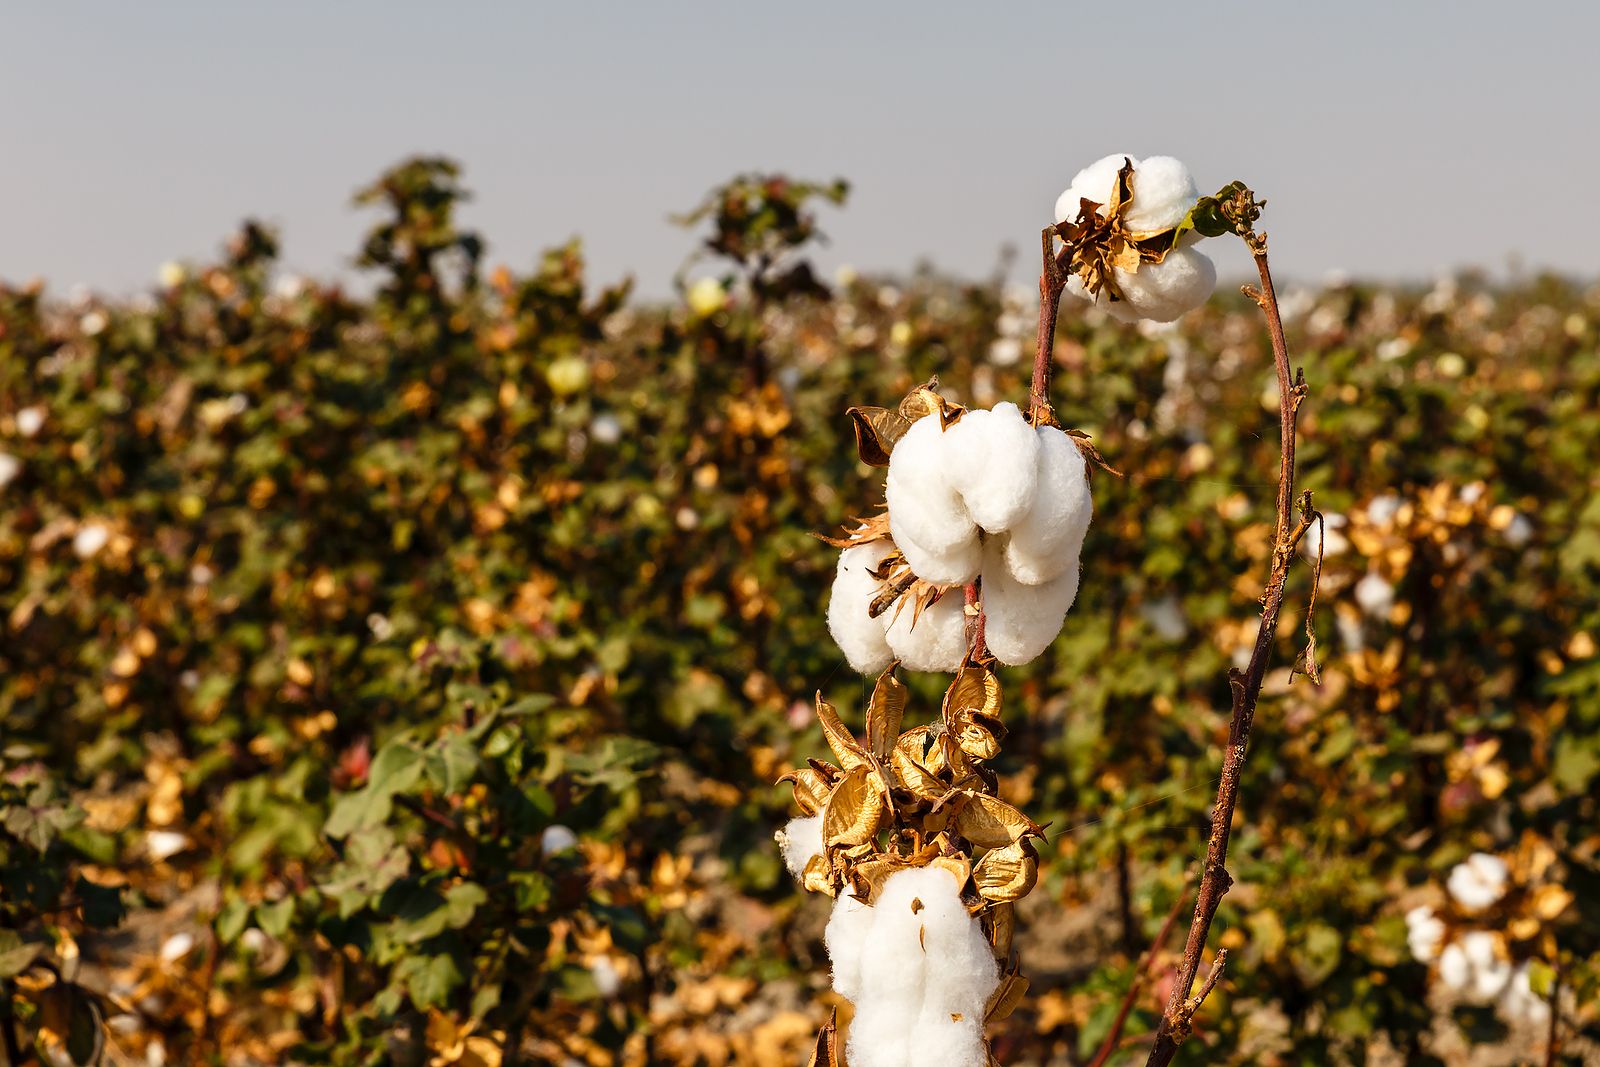 Uzbekistan's cotton experience can stimulate Azerbaijan to diversify its export